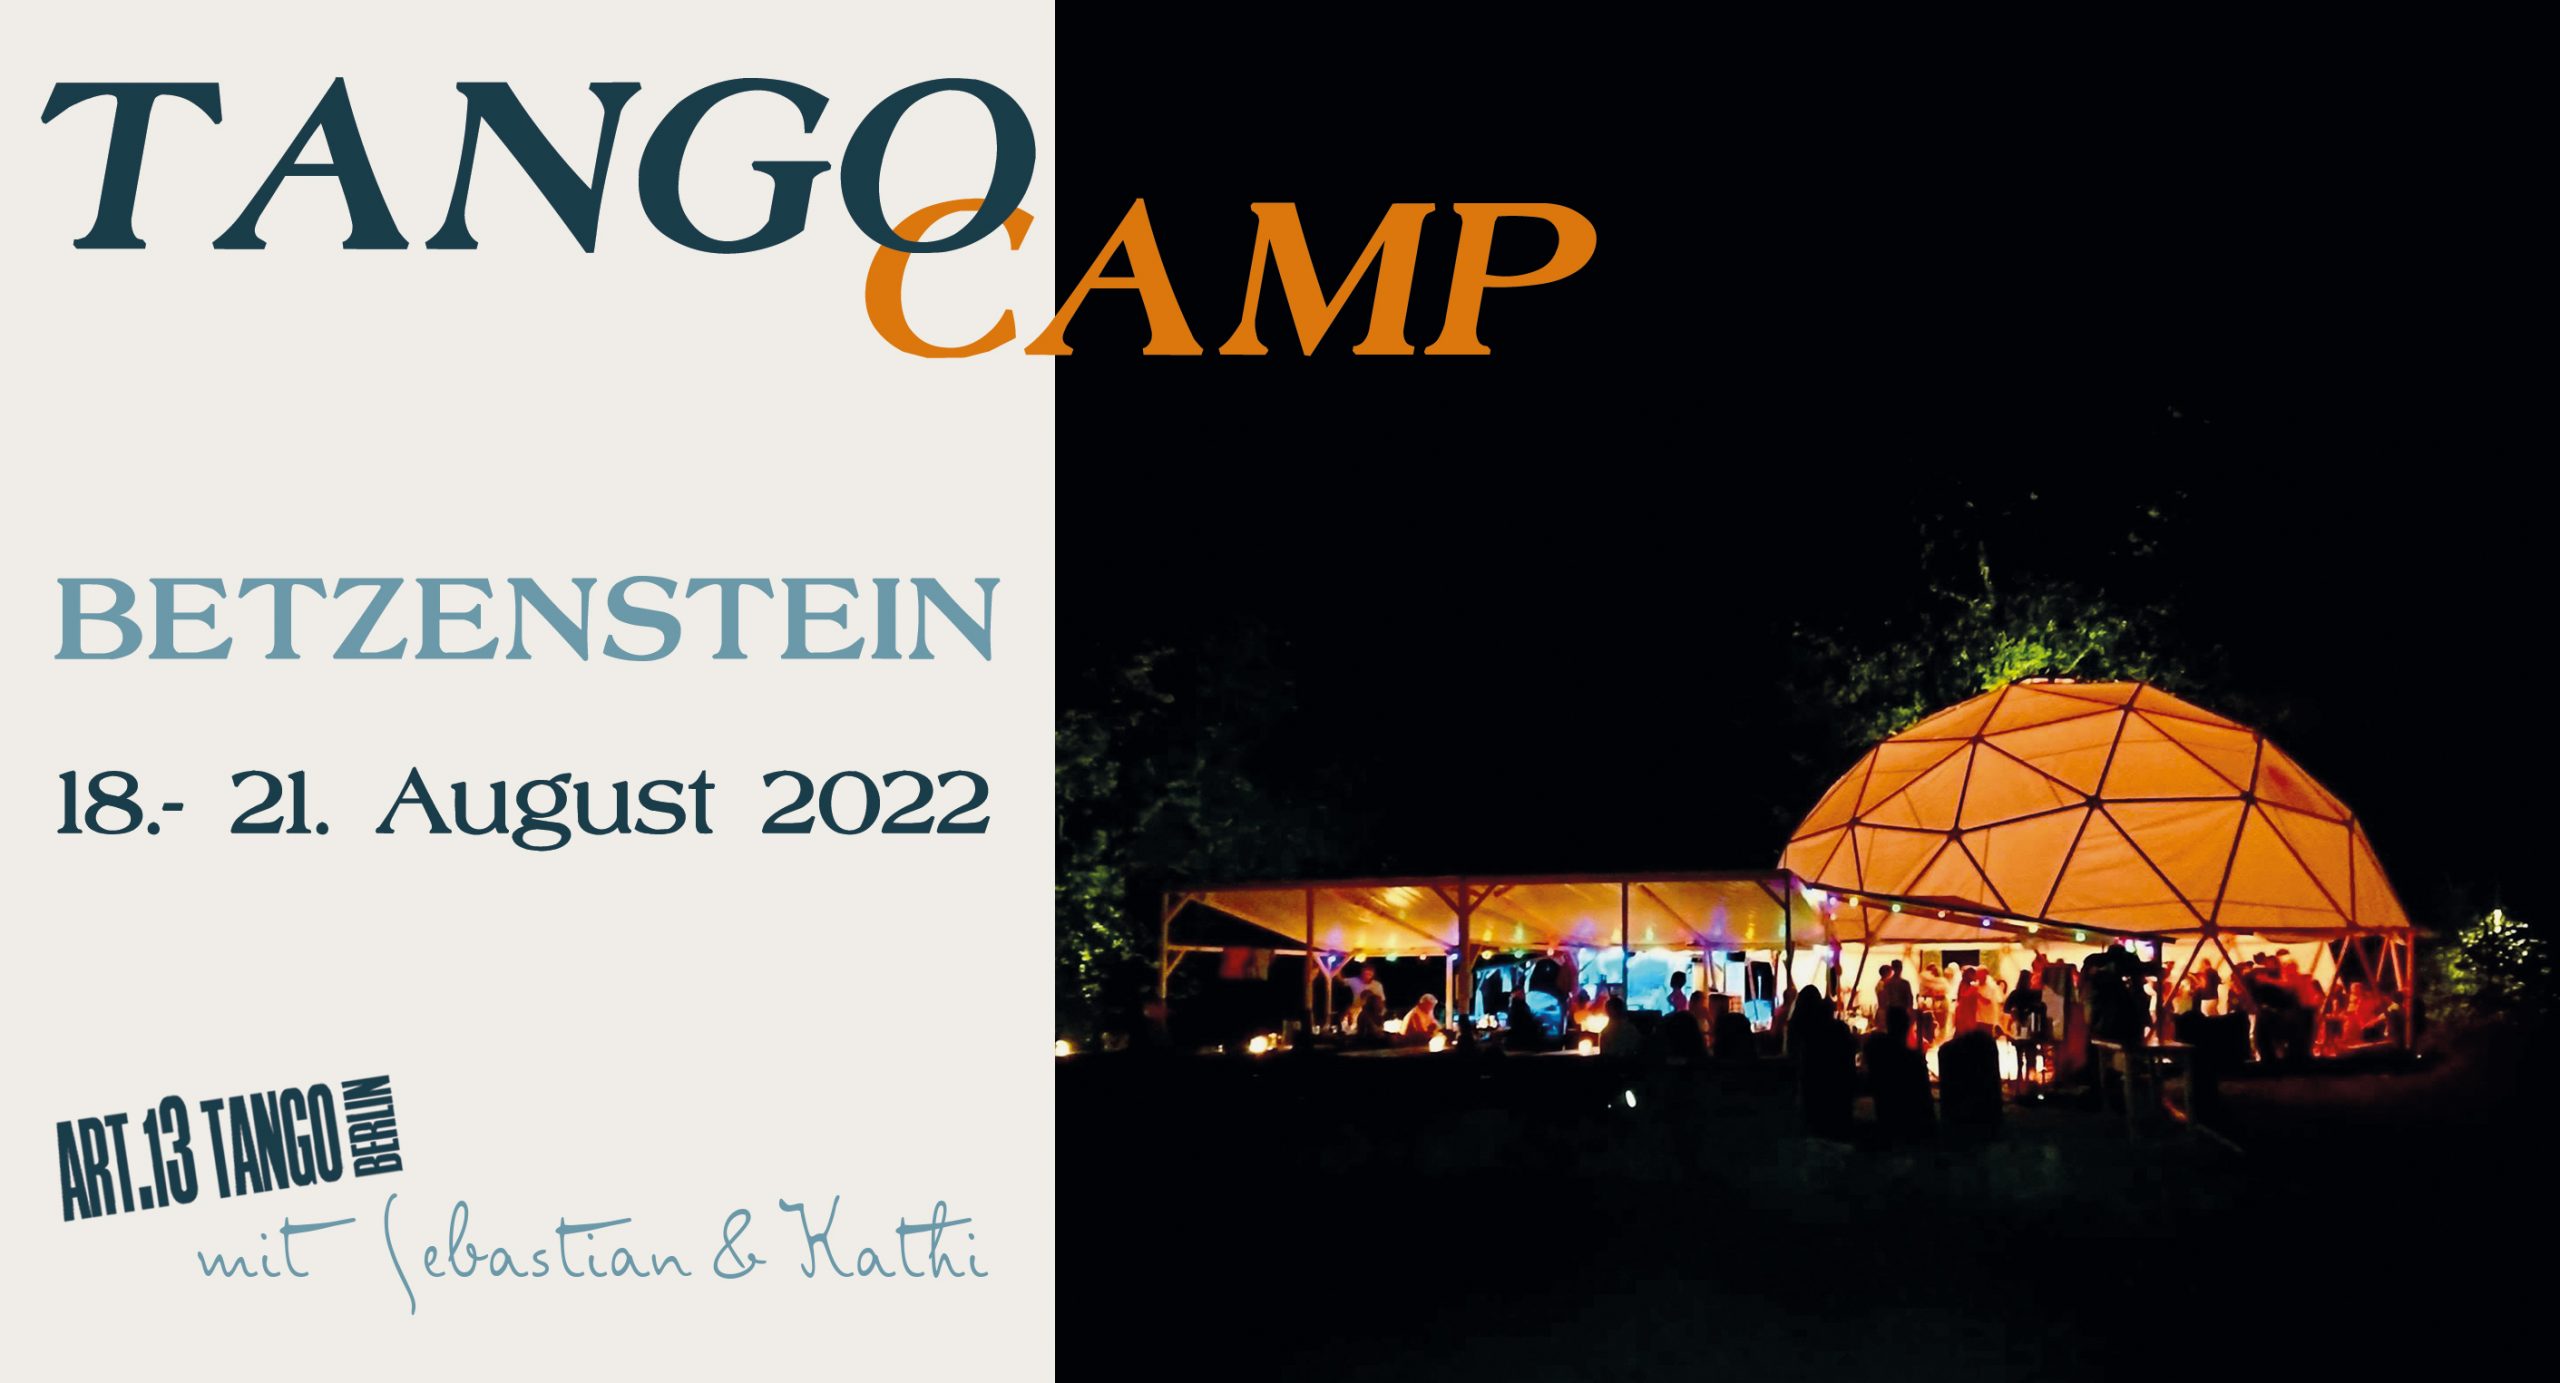 Tango-Camp Betzenstein | mit Sebastian & Kathi